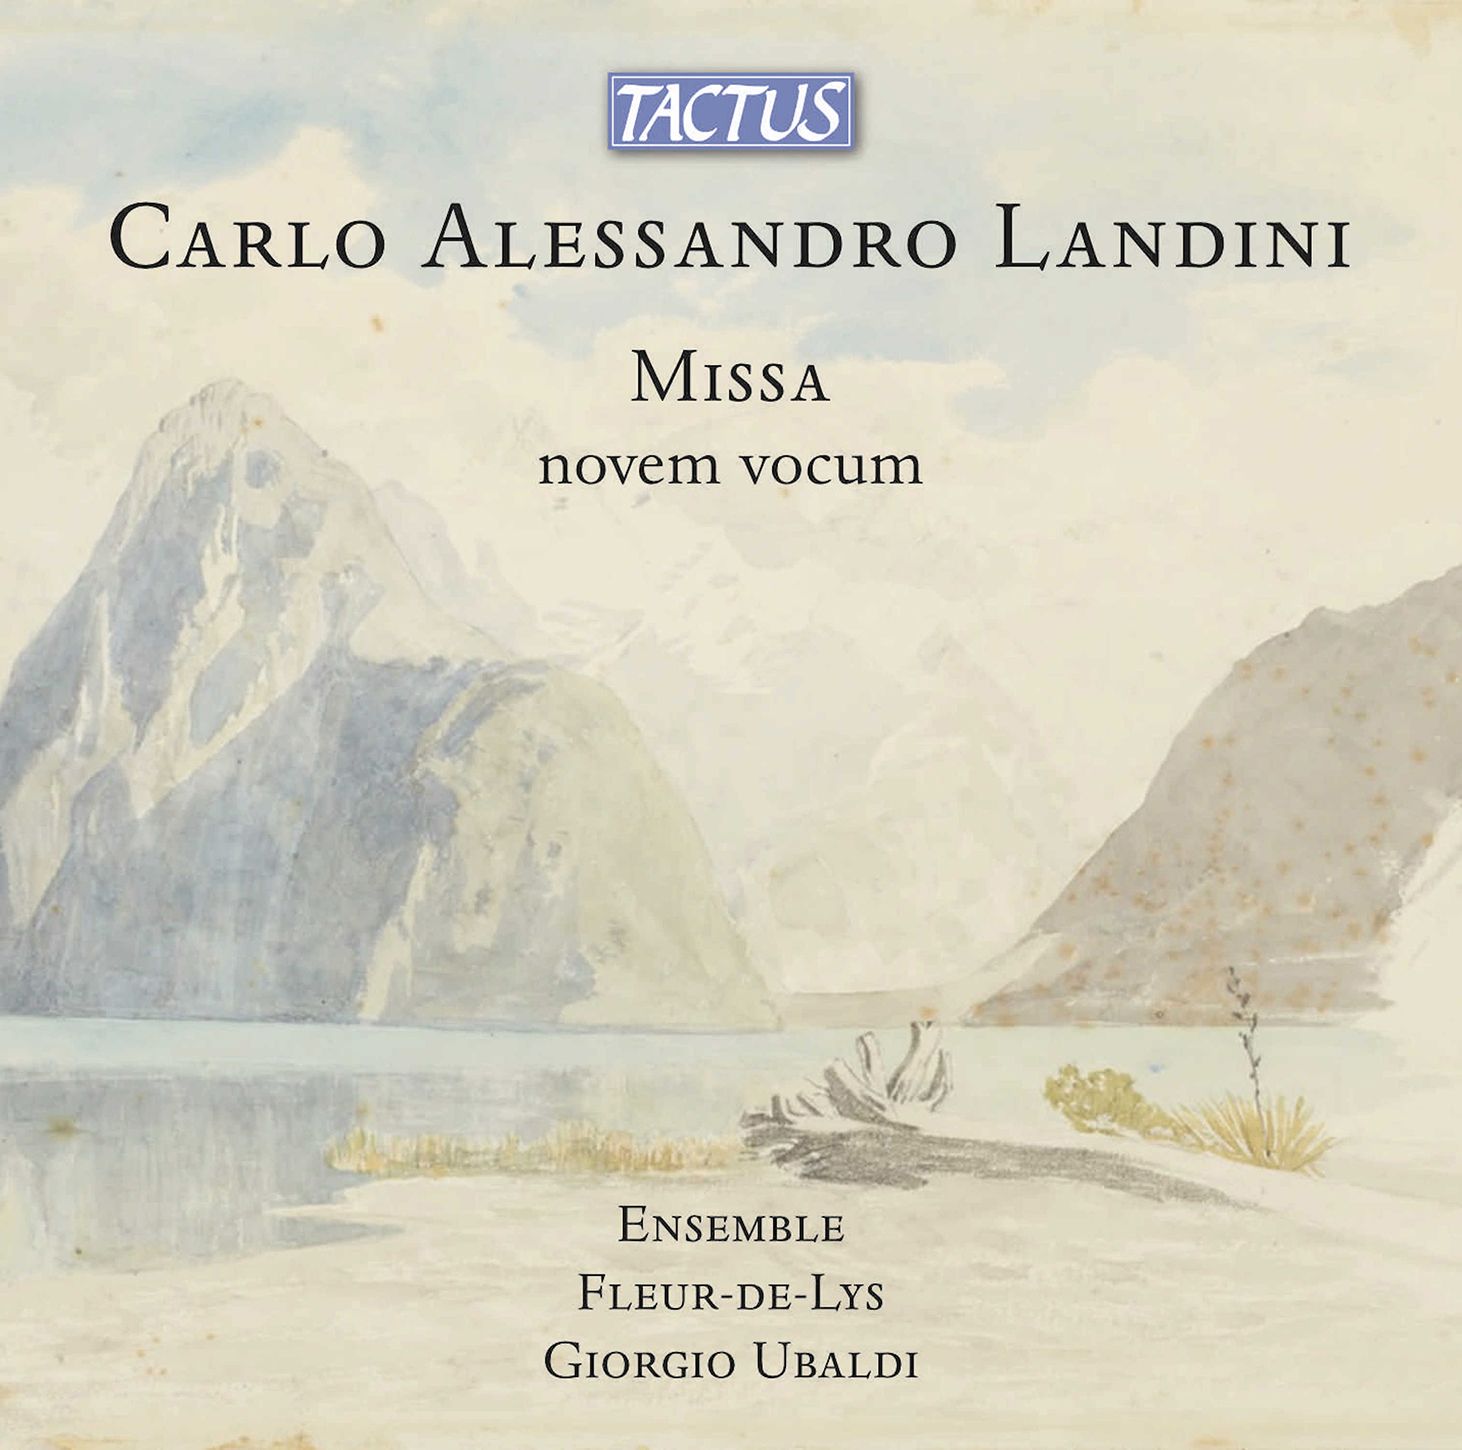 Carlo Alessandro Landini's Missa novem vocum